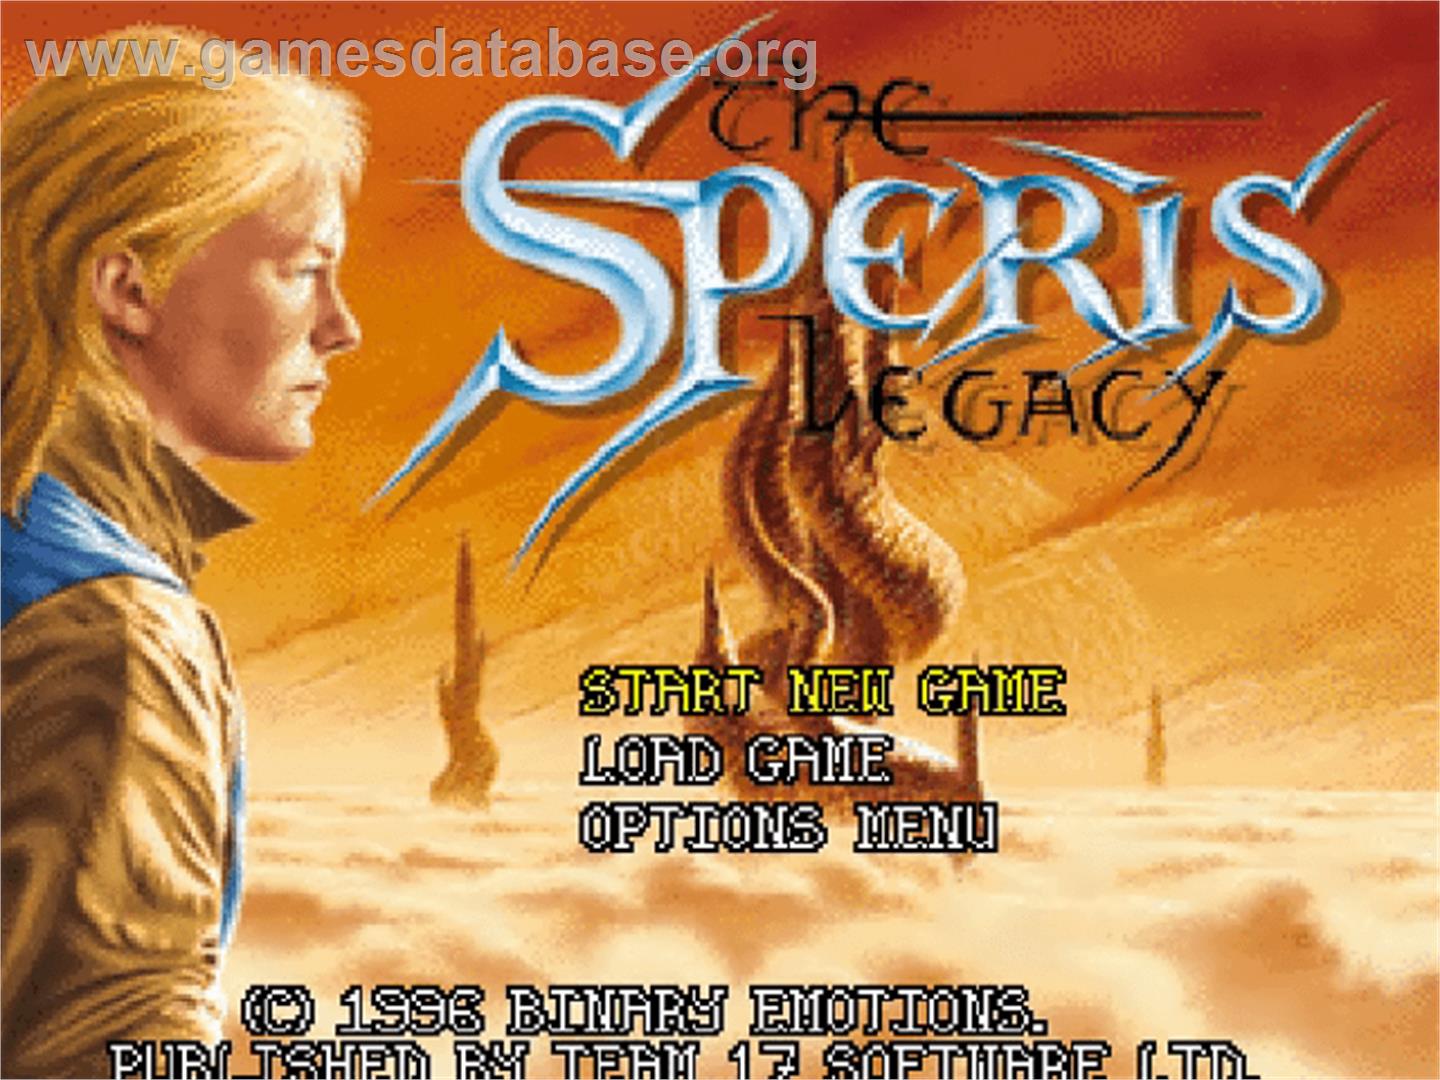 Speris Legacy - Commodore Amiga CD32 - Artwork - Title Screen